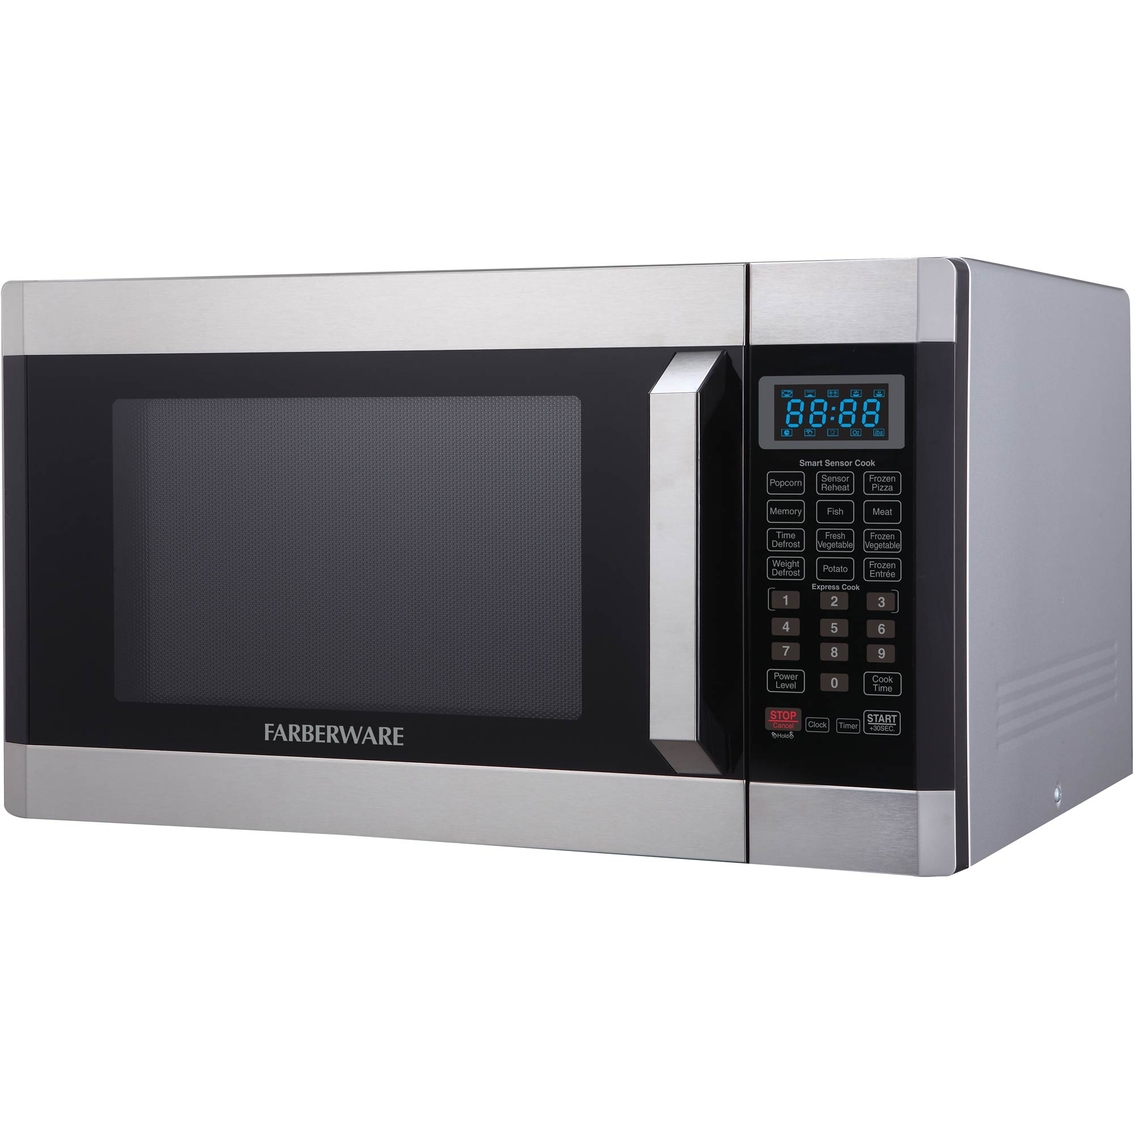 Farberware 1.6 cu. ft. Smart Sensor Microwave Oven - Image 2 of 7